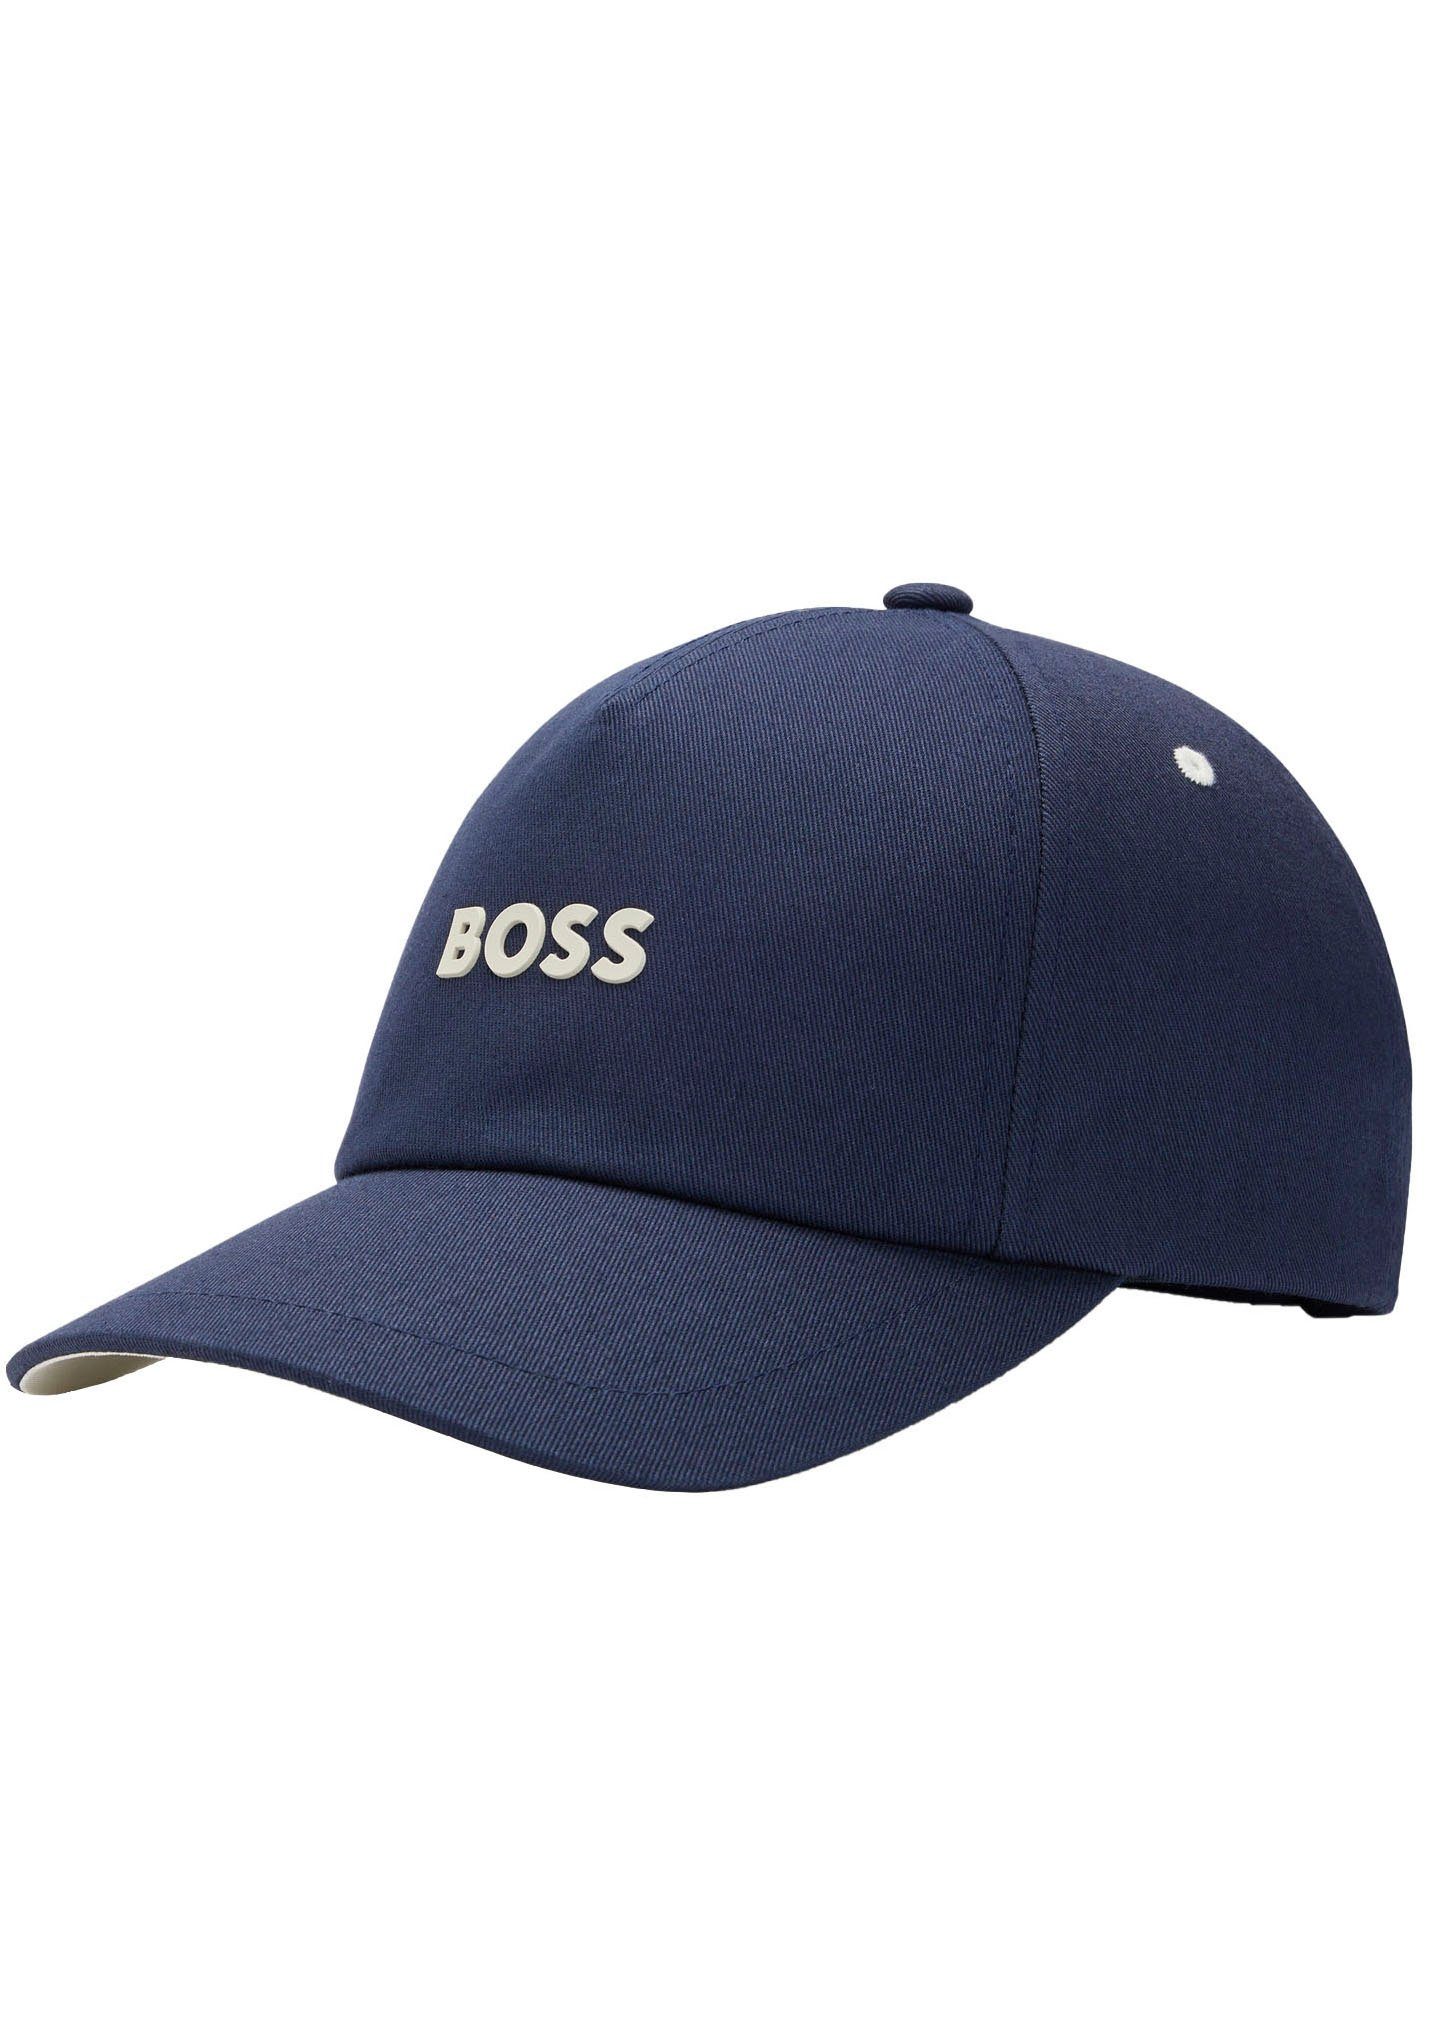 ORANGE Klettverschluss dark-Blue Fresco-3 Baseball Cap mit BOSS